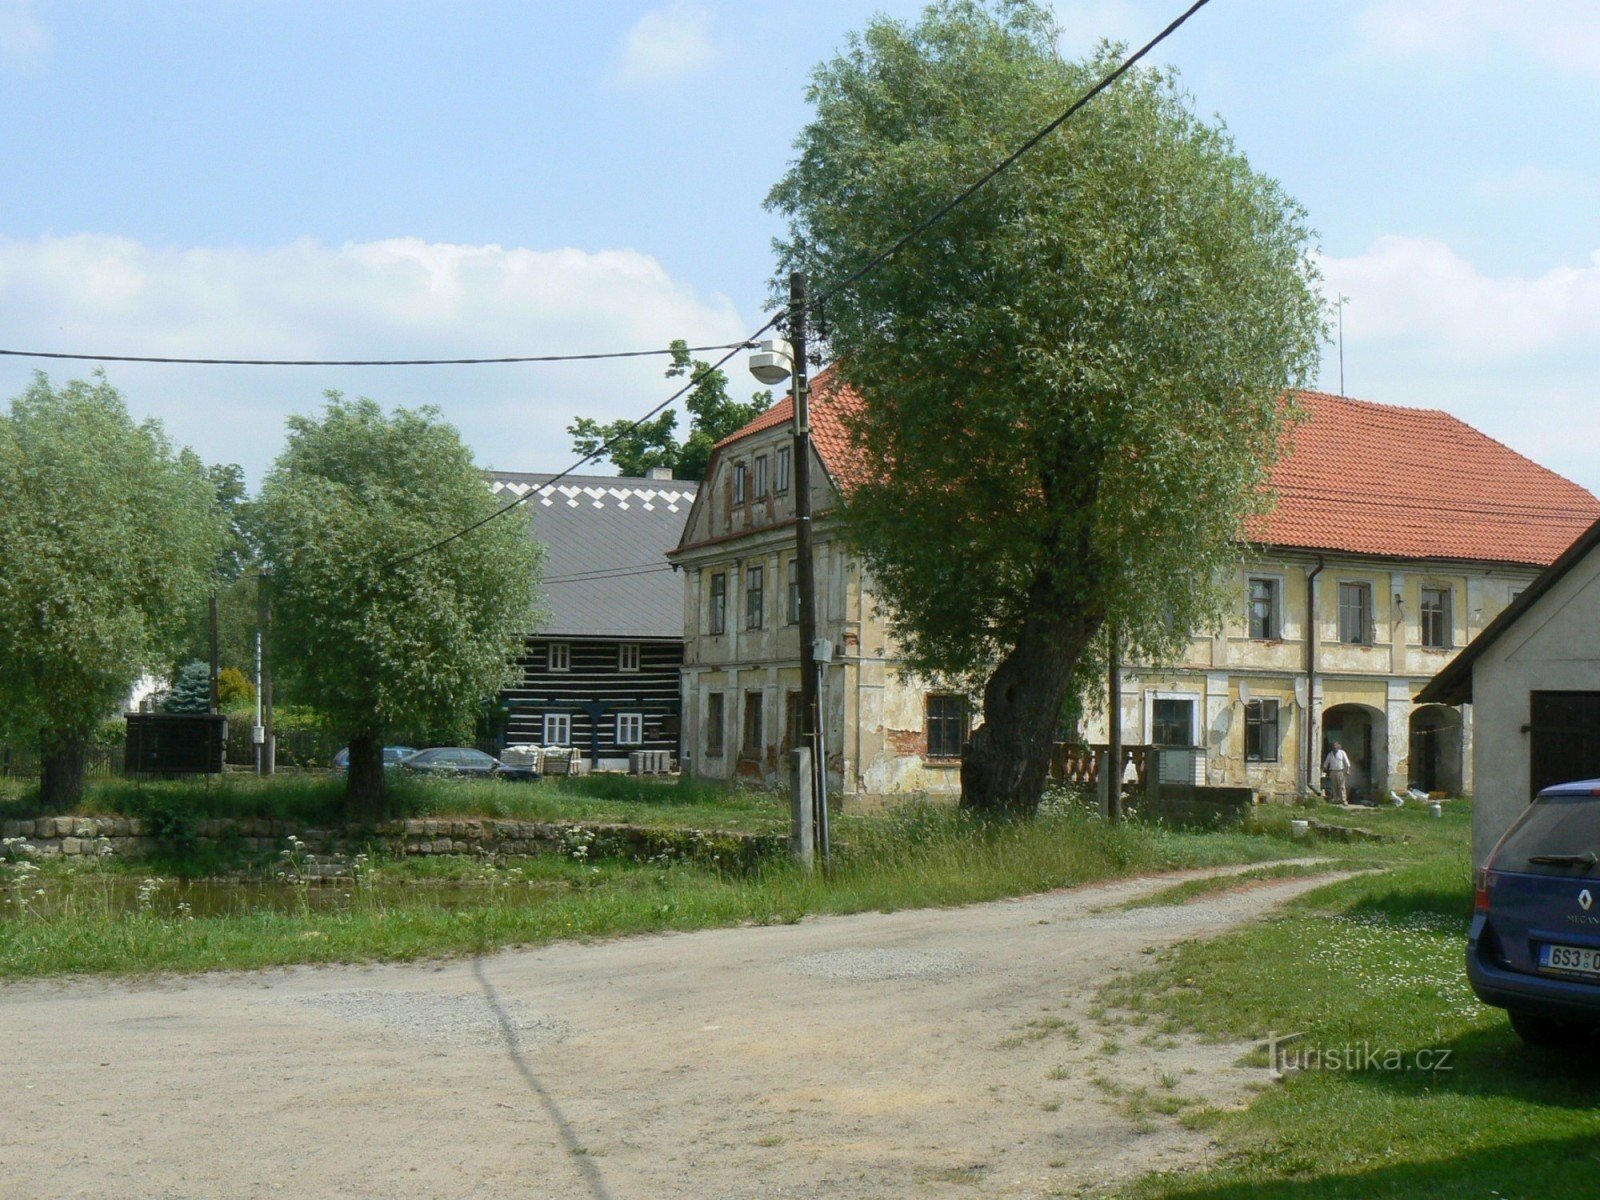 Huse i landsbyen